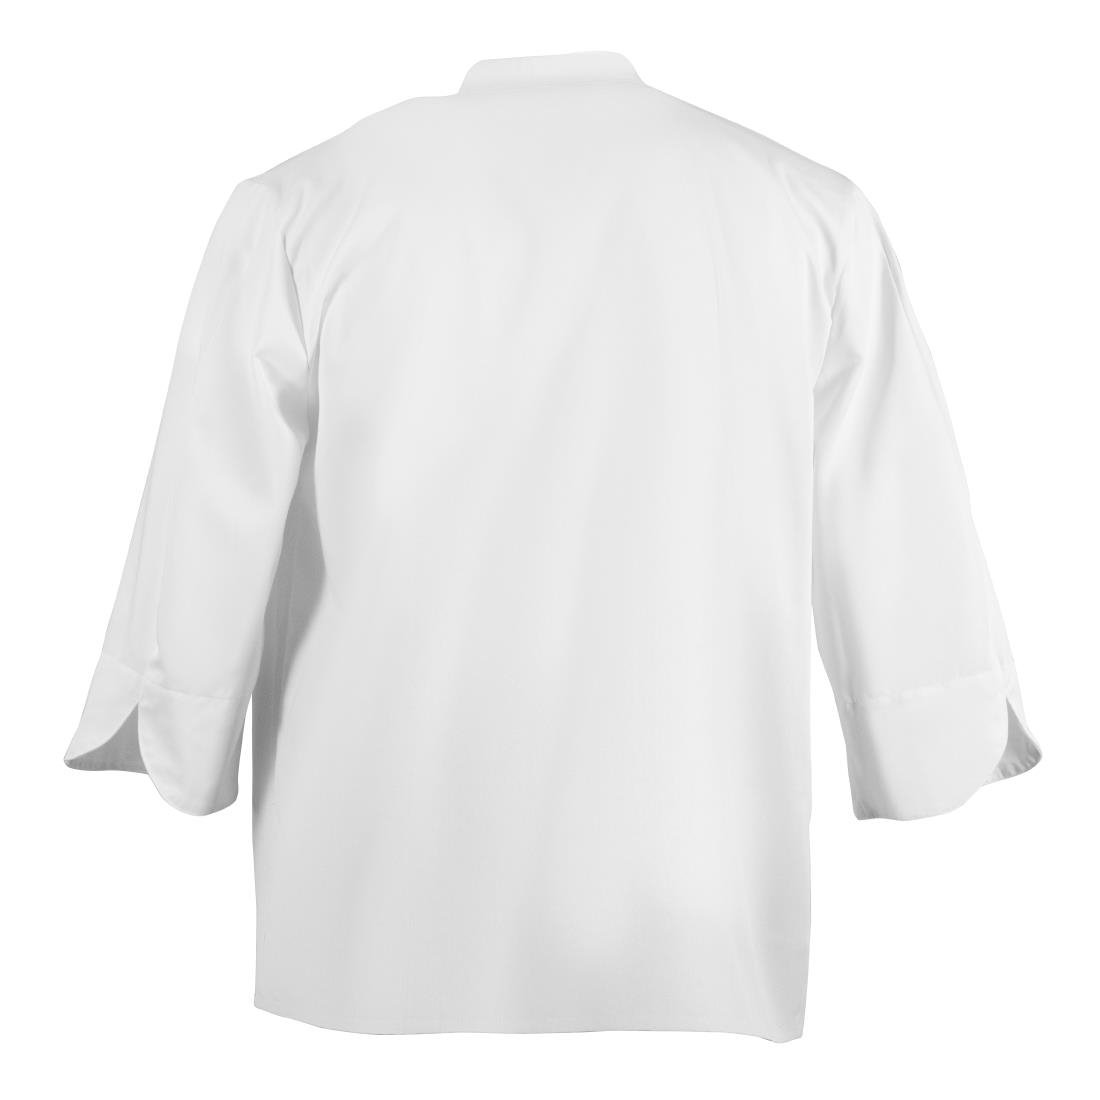 BB578-M Whites Unisex Atlanta Chef Jacket White Teflon Size M JD Catering Equipment Solutions Ltd